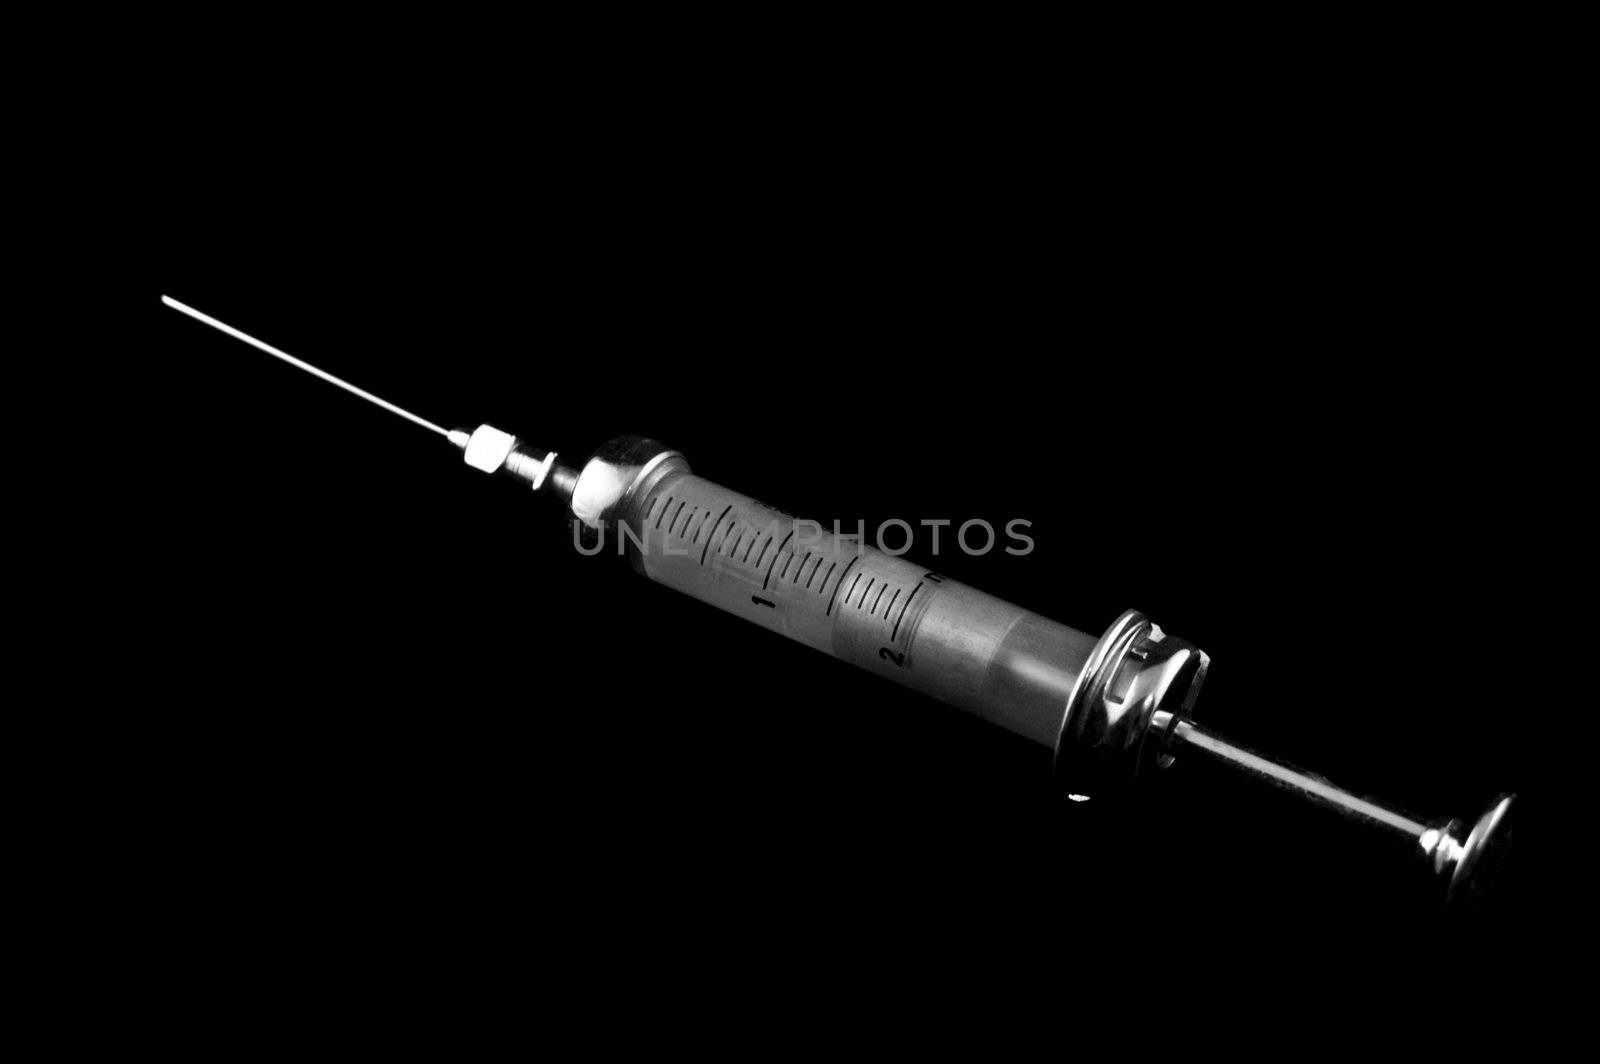 syringe on a black background by galcka